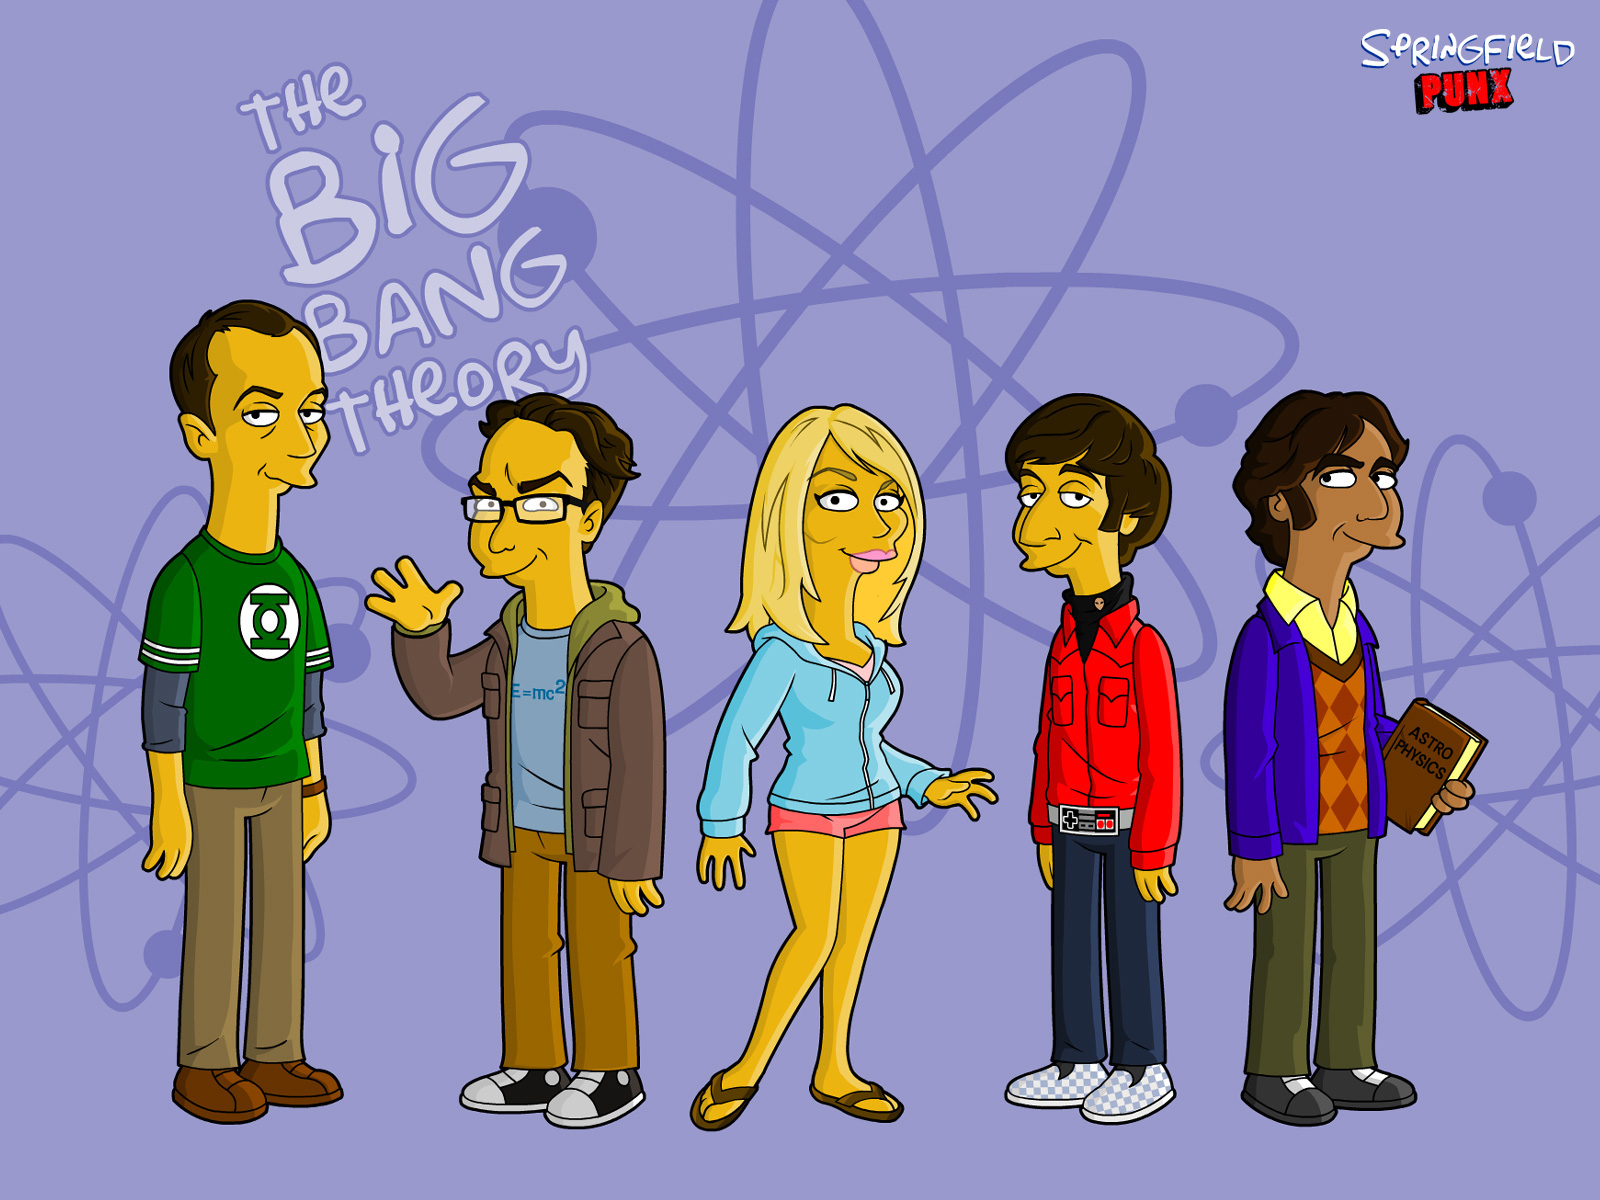 the big bang theory wallpaper,animated cartoon,cartoon,social group,animation,illustration